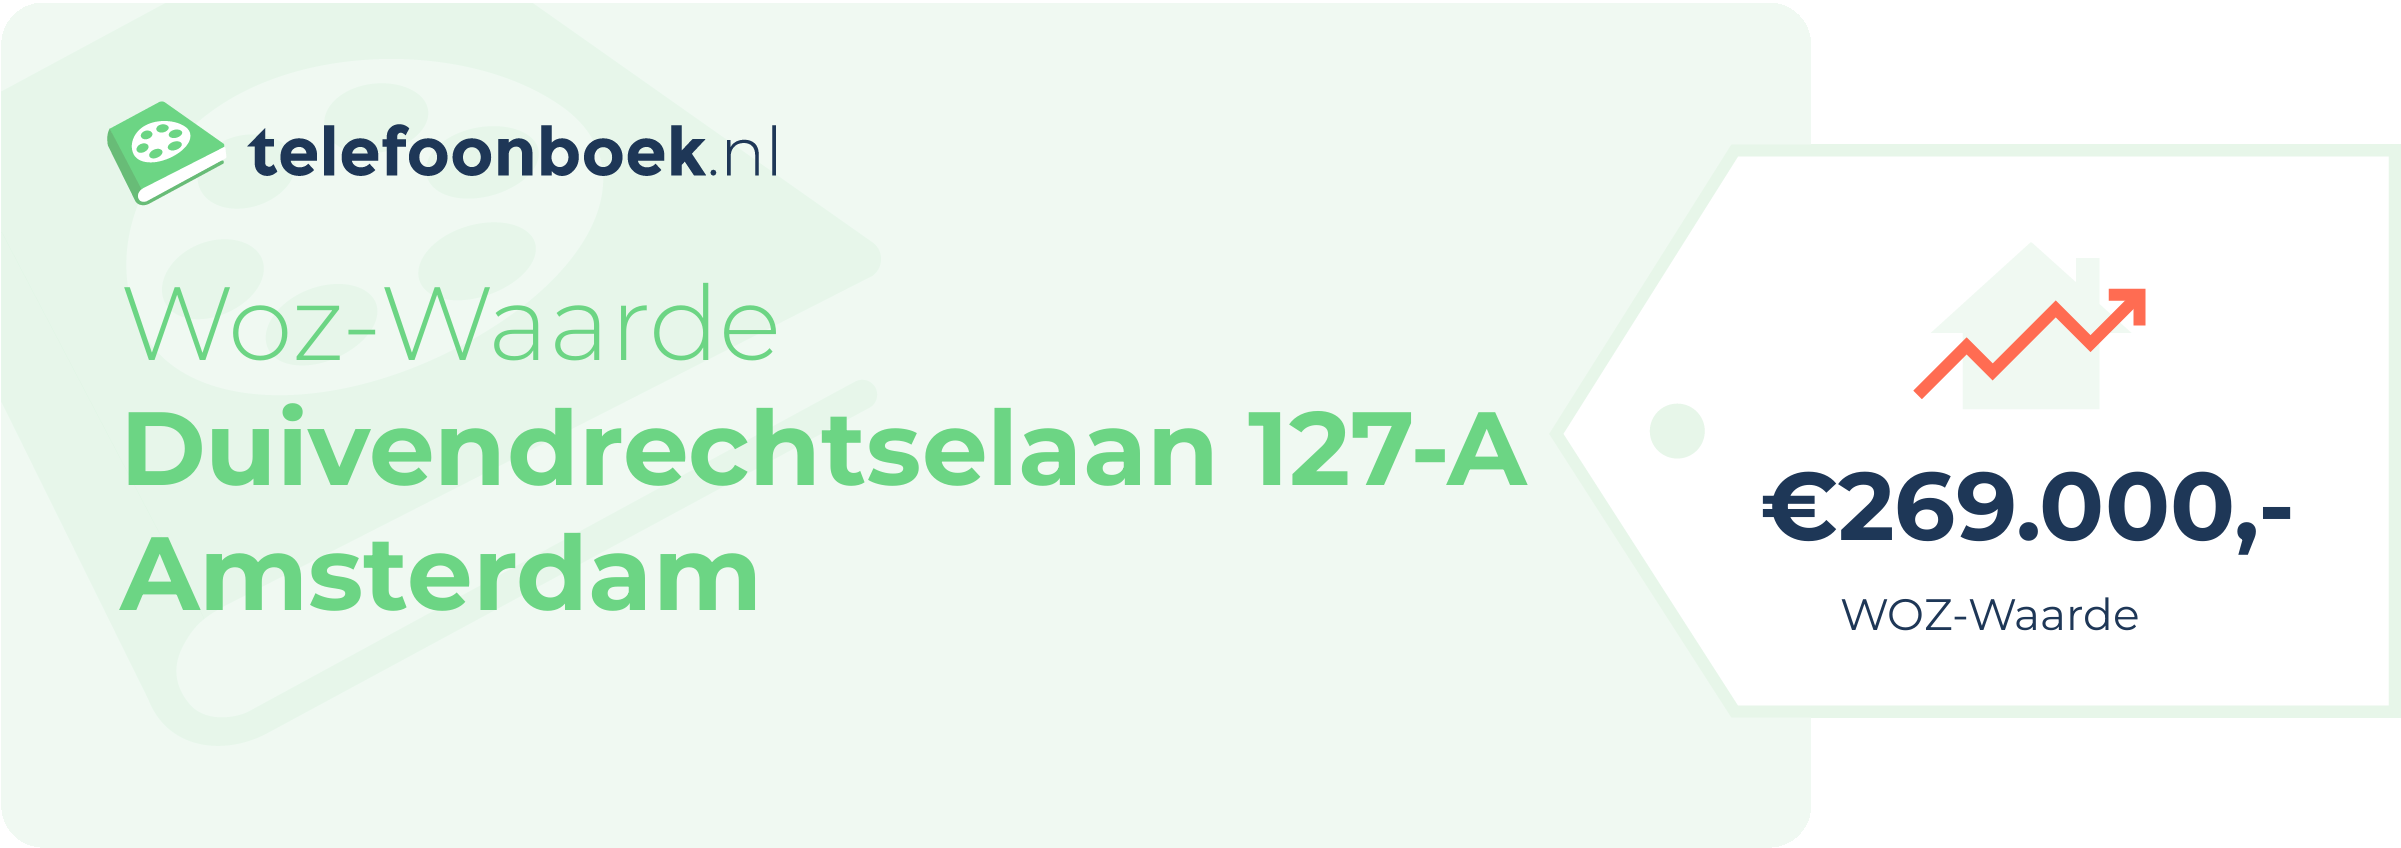 WOZ-waarde Duivendrechtselaan 127-A Amsterdam